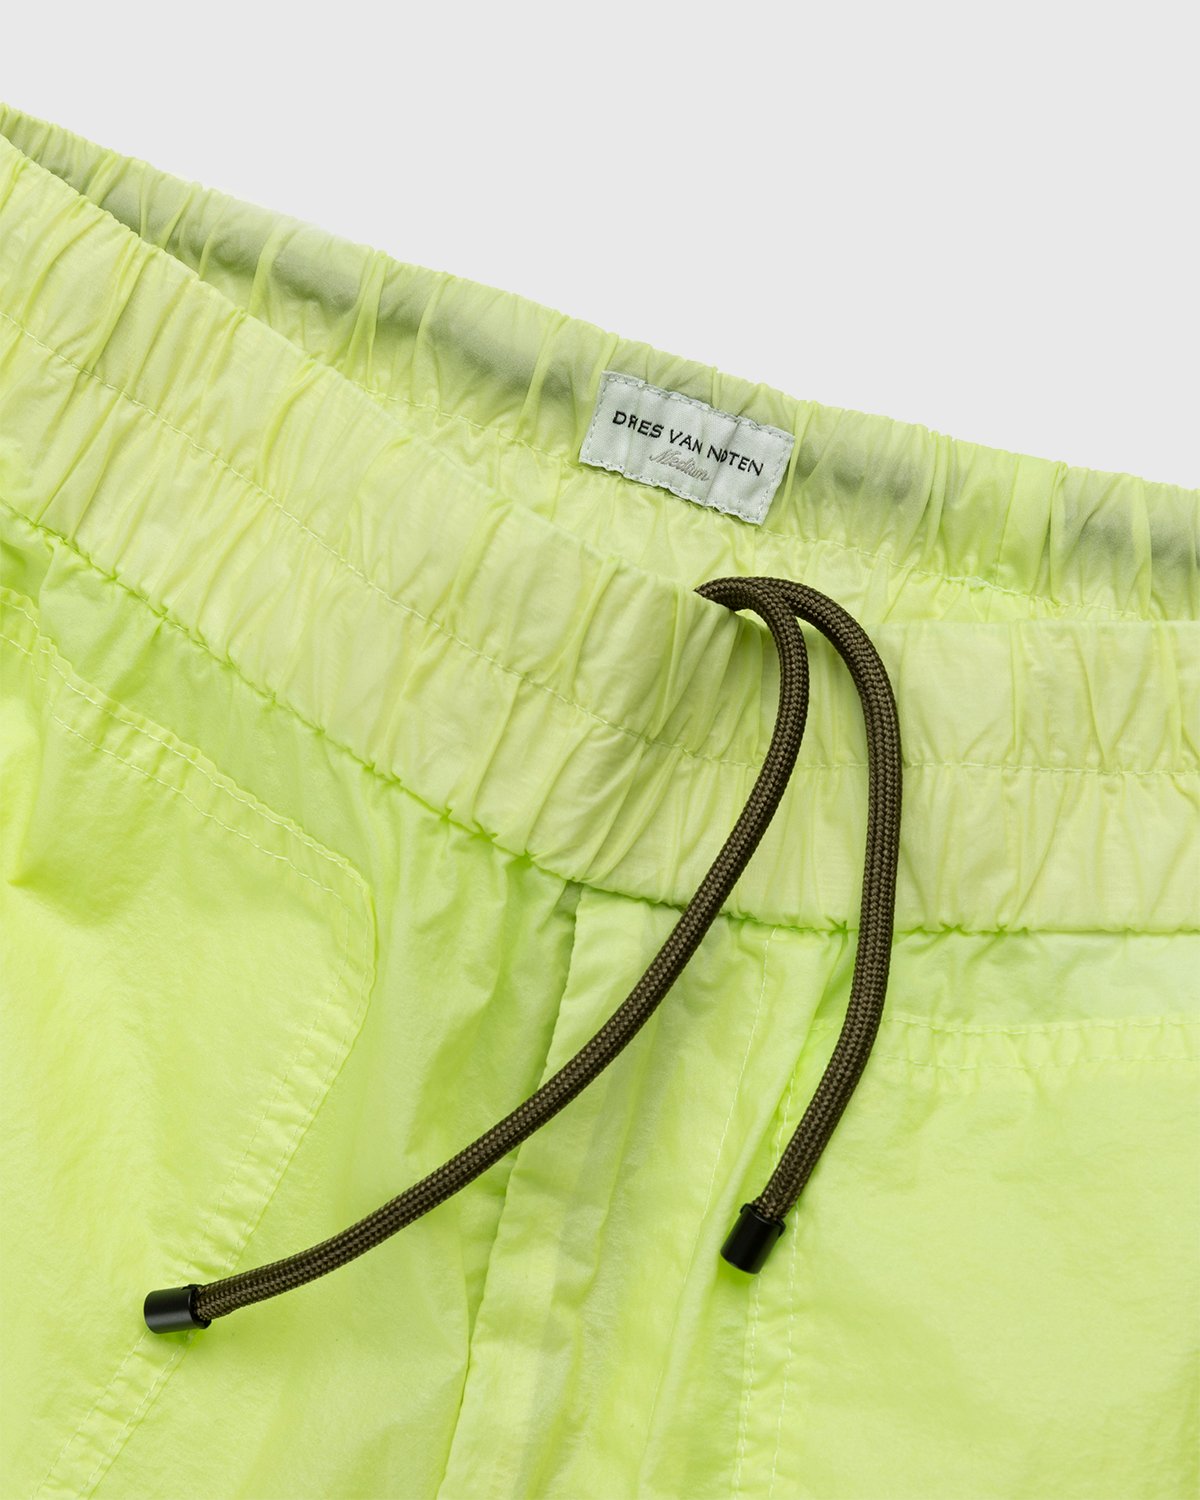 Dries van Noten - Pooles Shorts Lime - Clothing - Green - Image 5